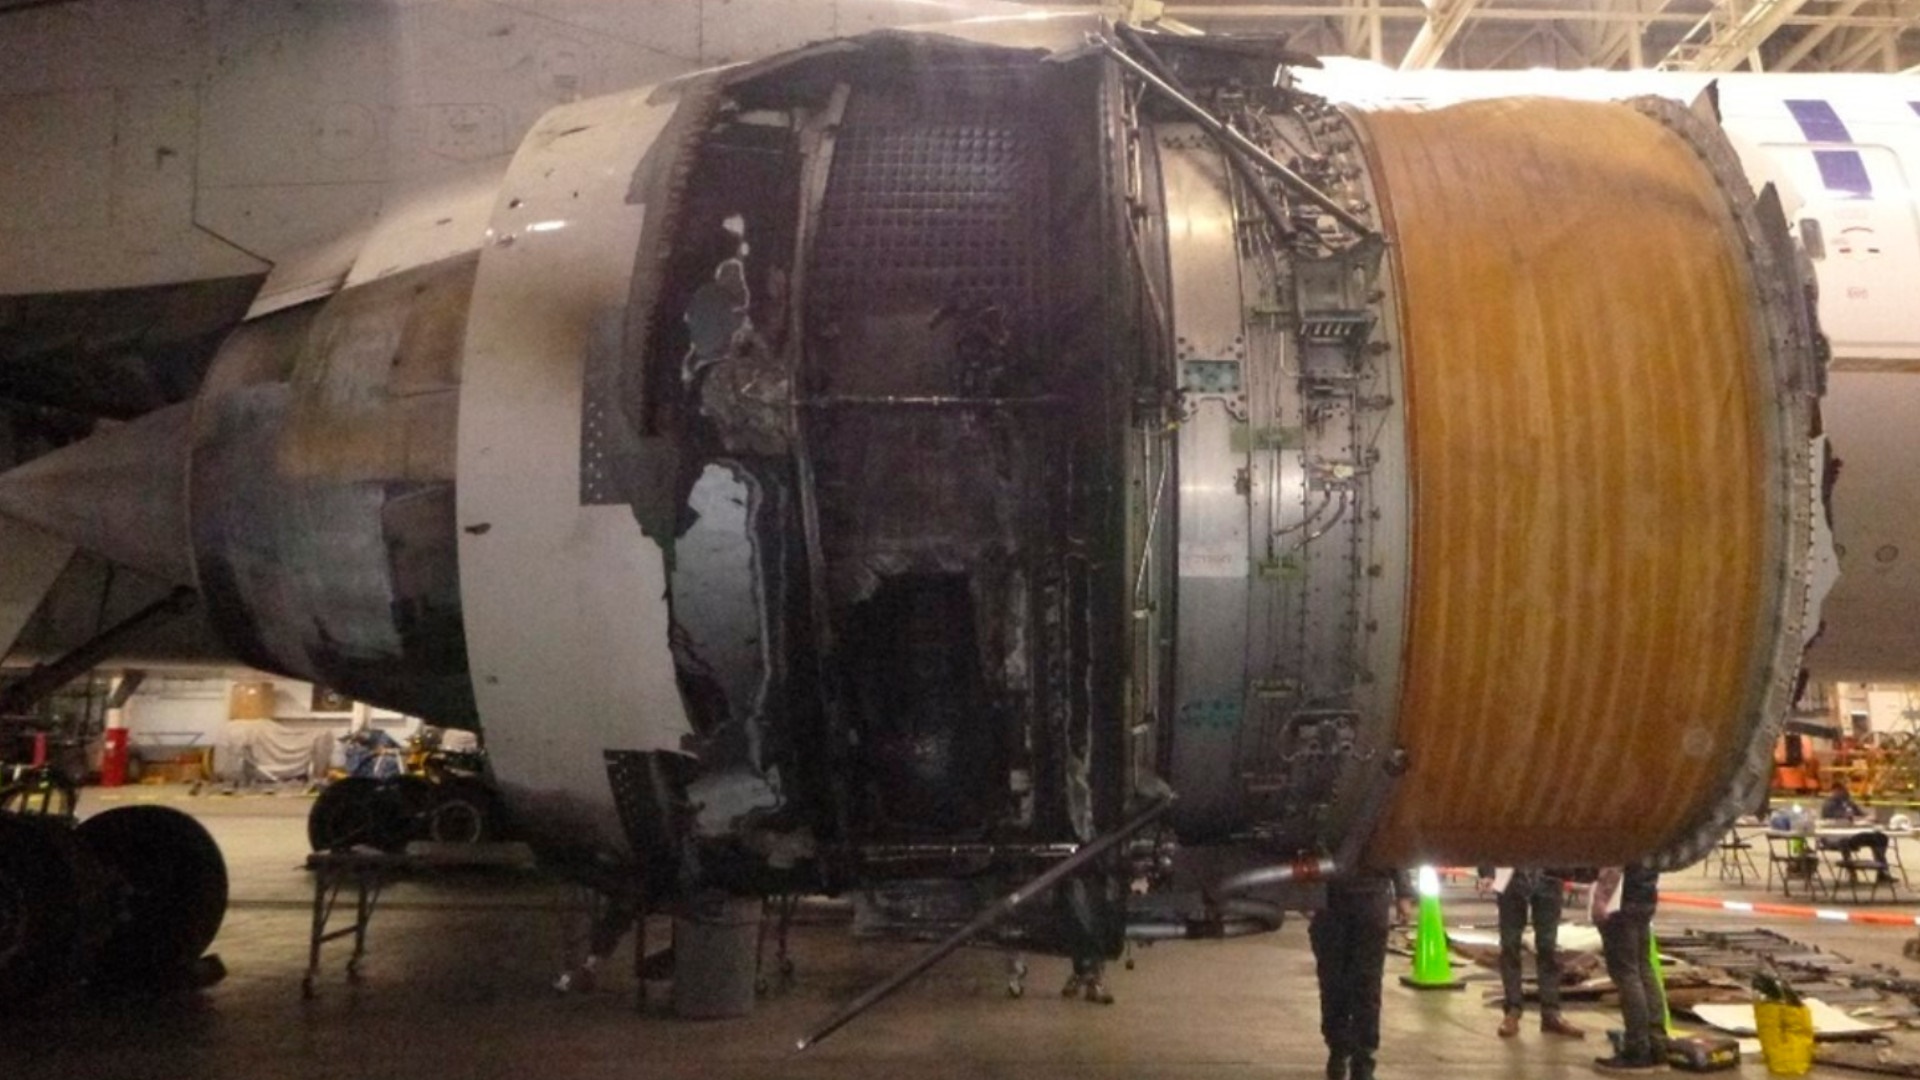 Exam Finds Multiple Cracks in Part of United Jet’s Engine